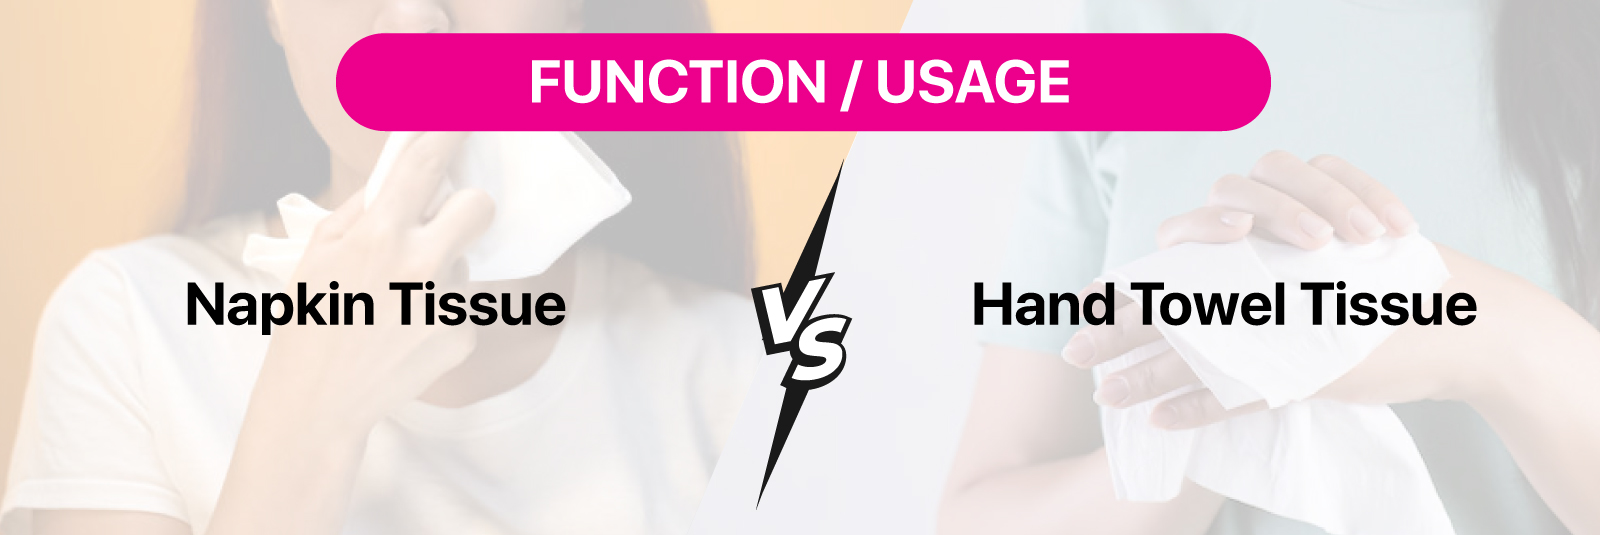 Function / Usage - Napkin Tissue vs Hand Towel Tissue